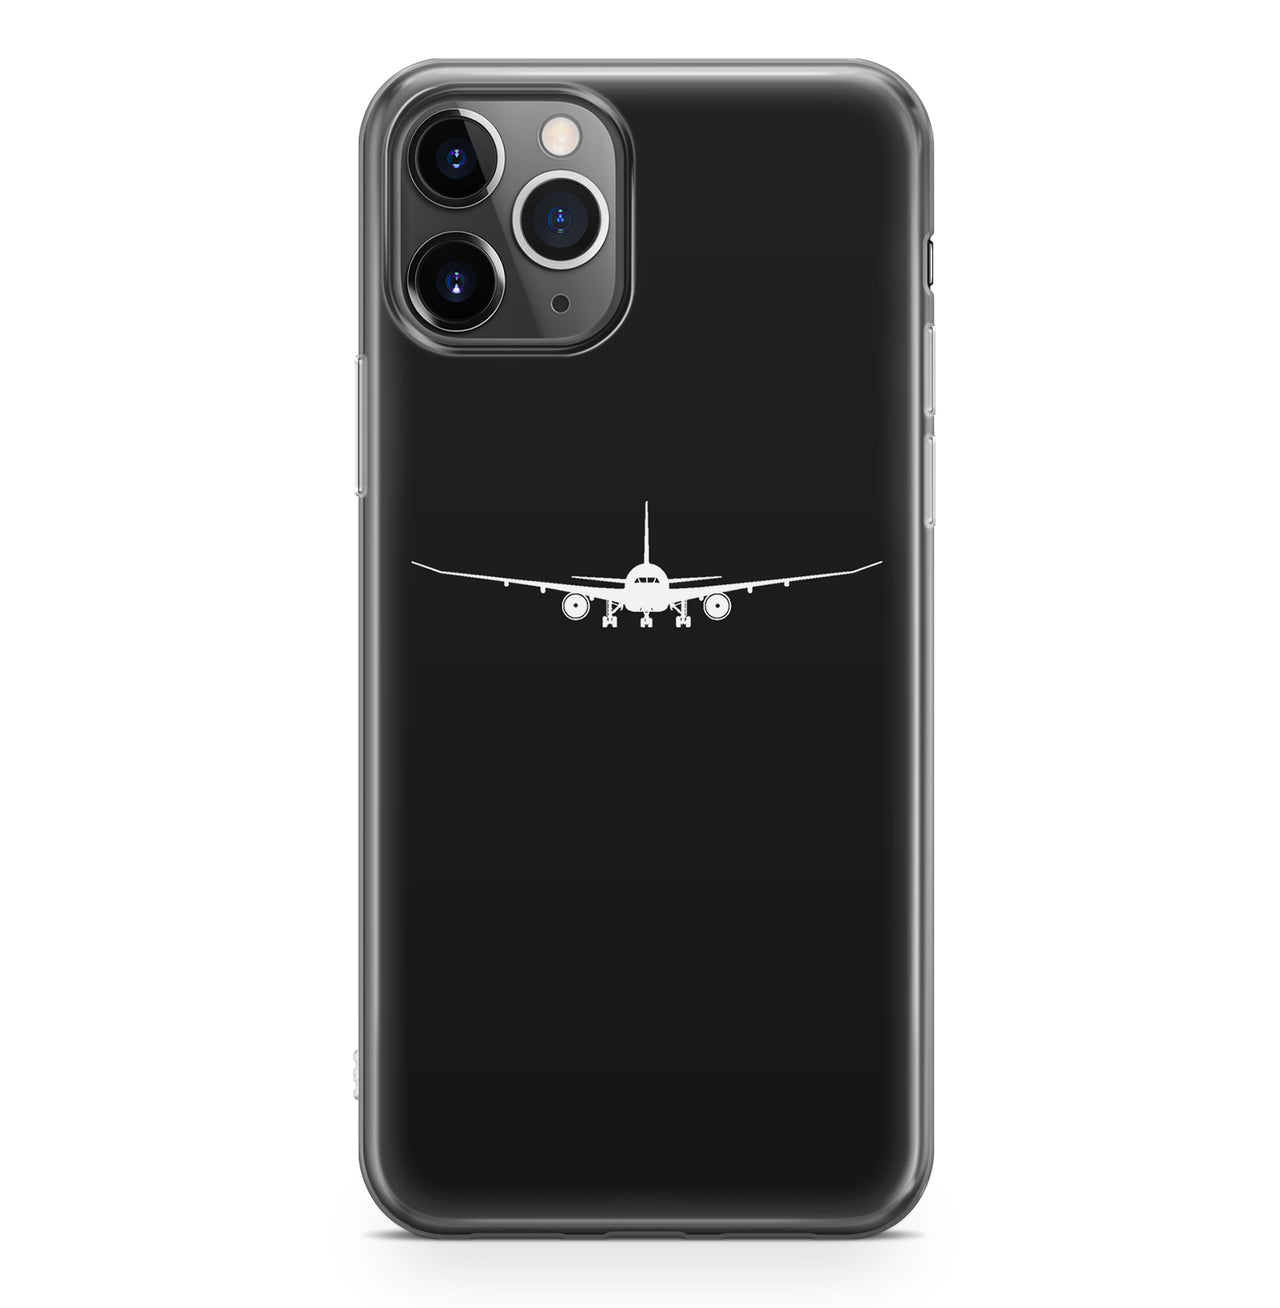 Boeing 787 Silhouette Designed iPhone Cases